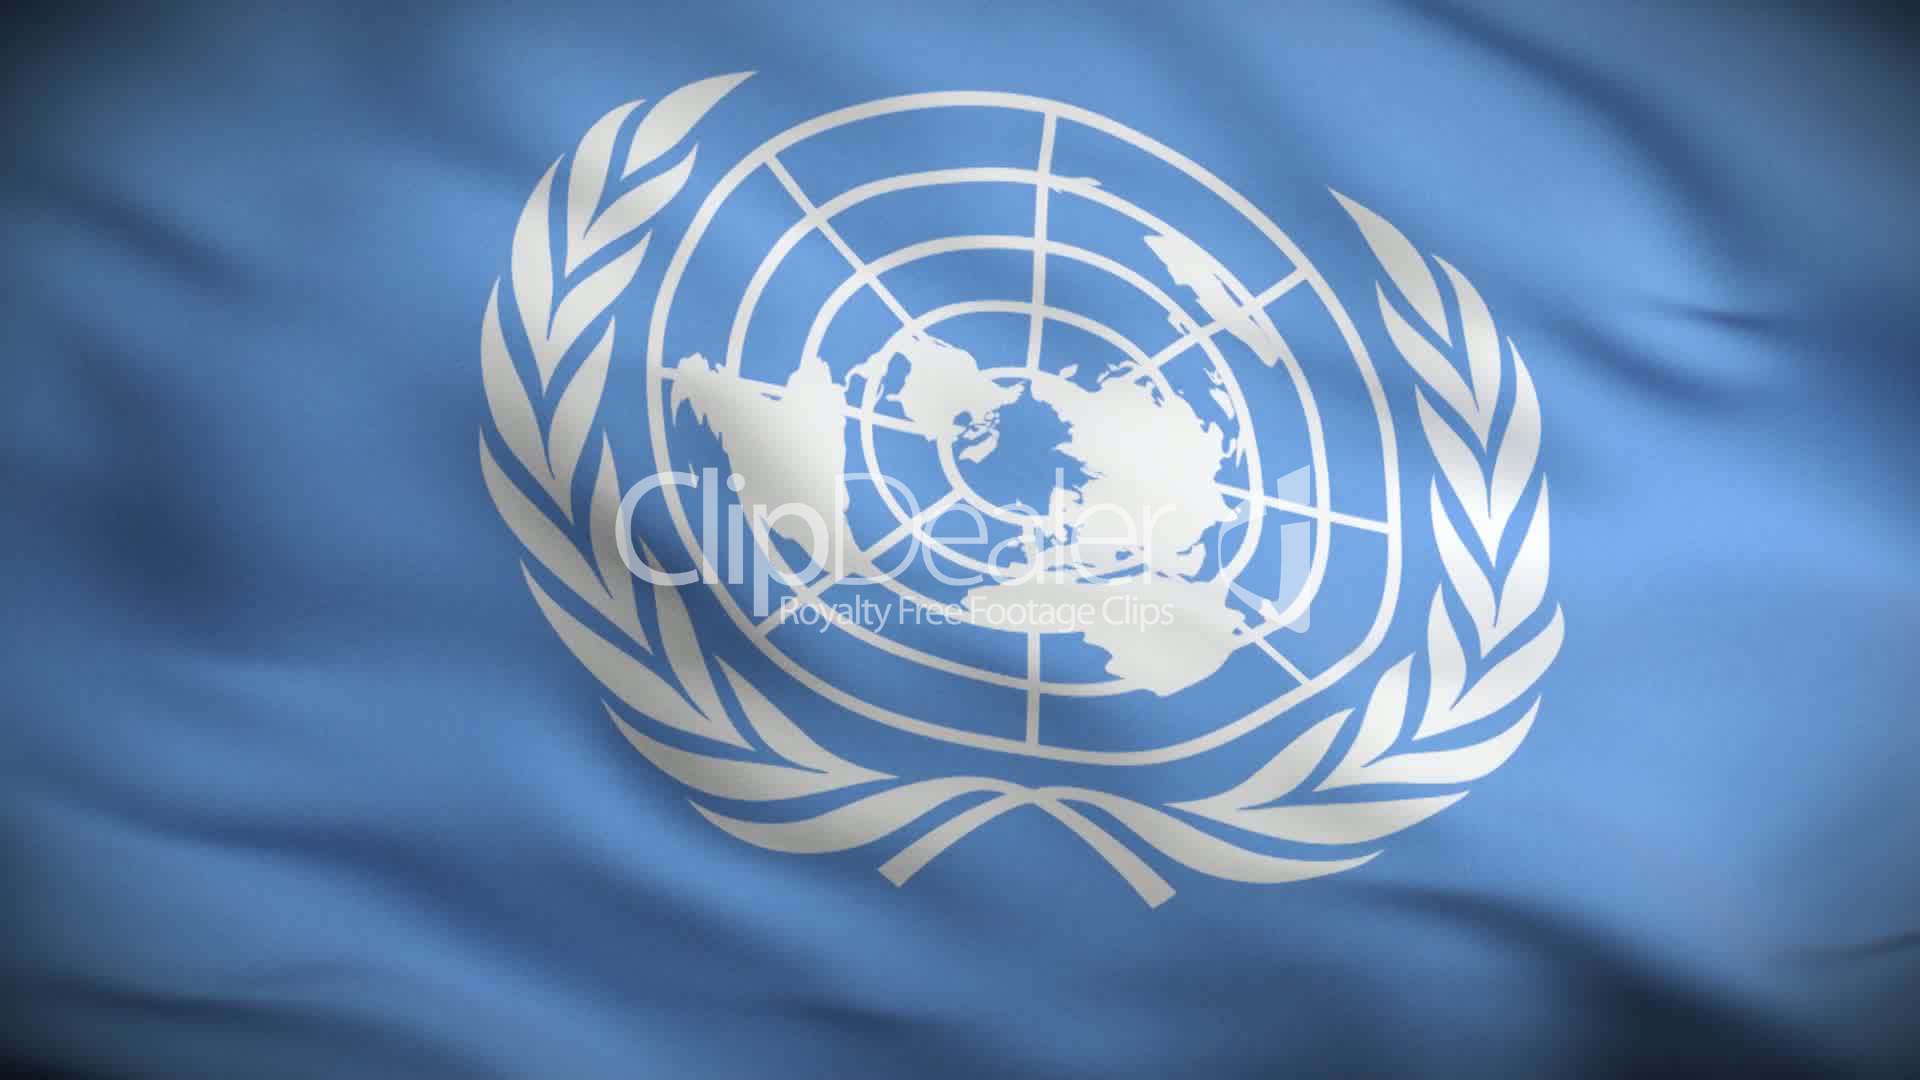 Е оон. Флаг ООН. Флаг ООН 1945. Знат ООН. Знак ООН 1219.